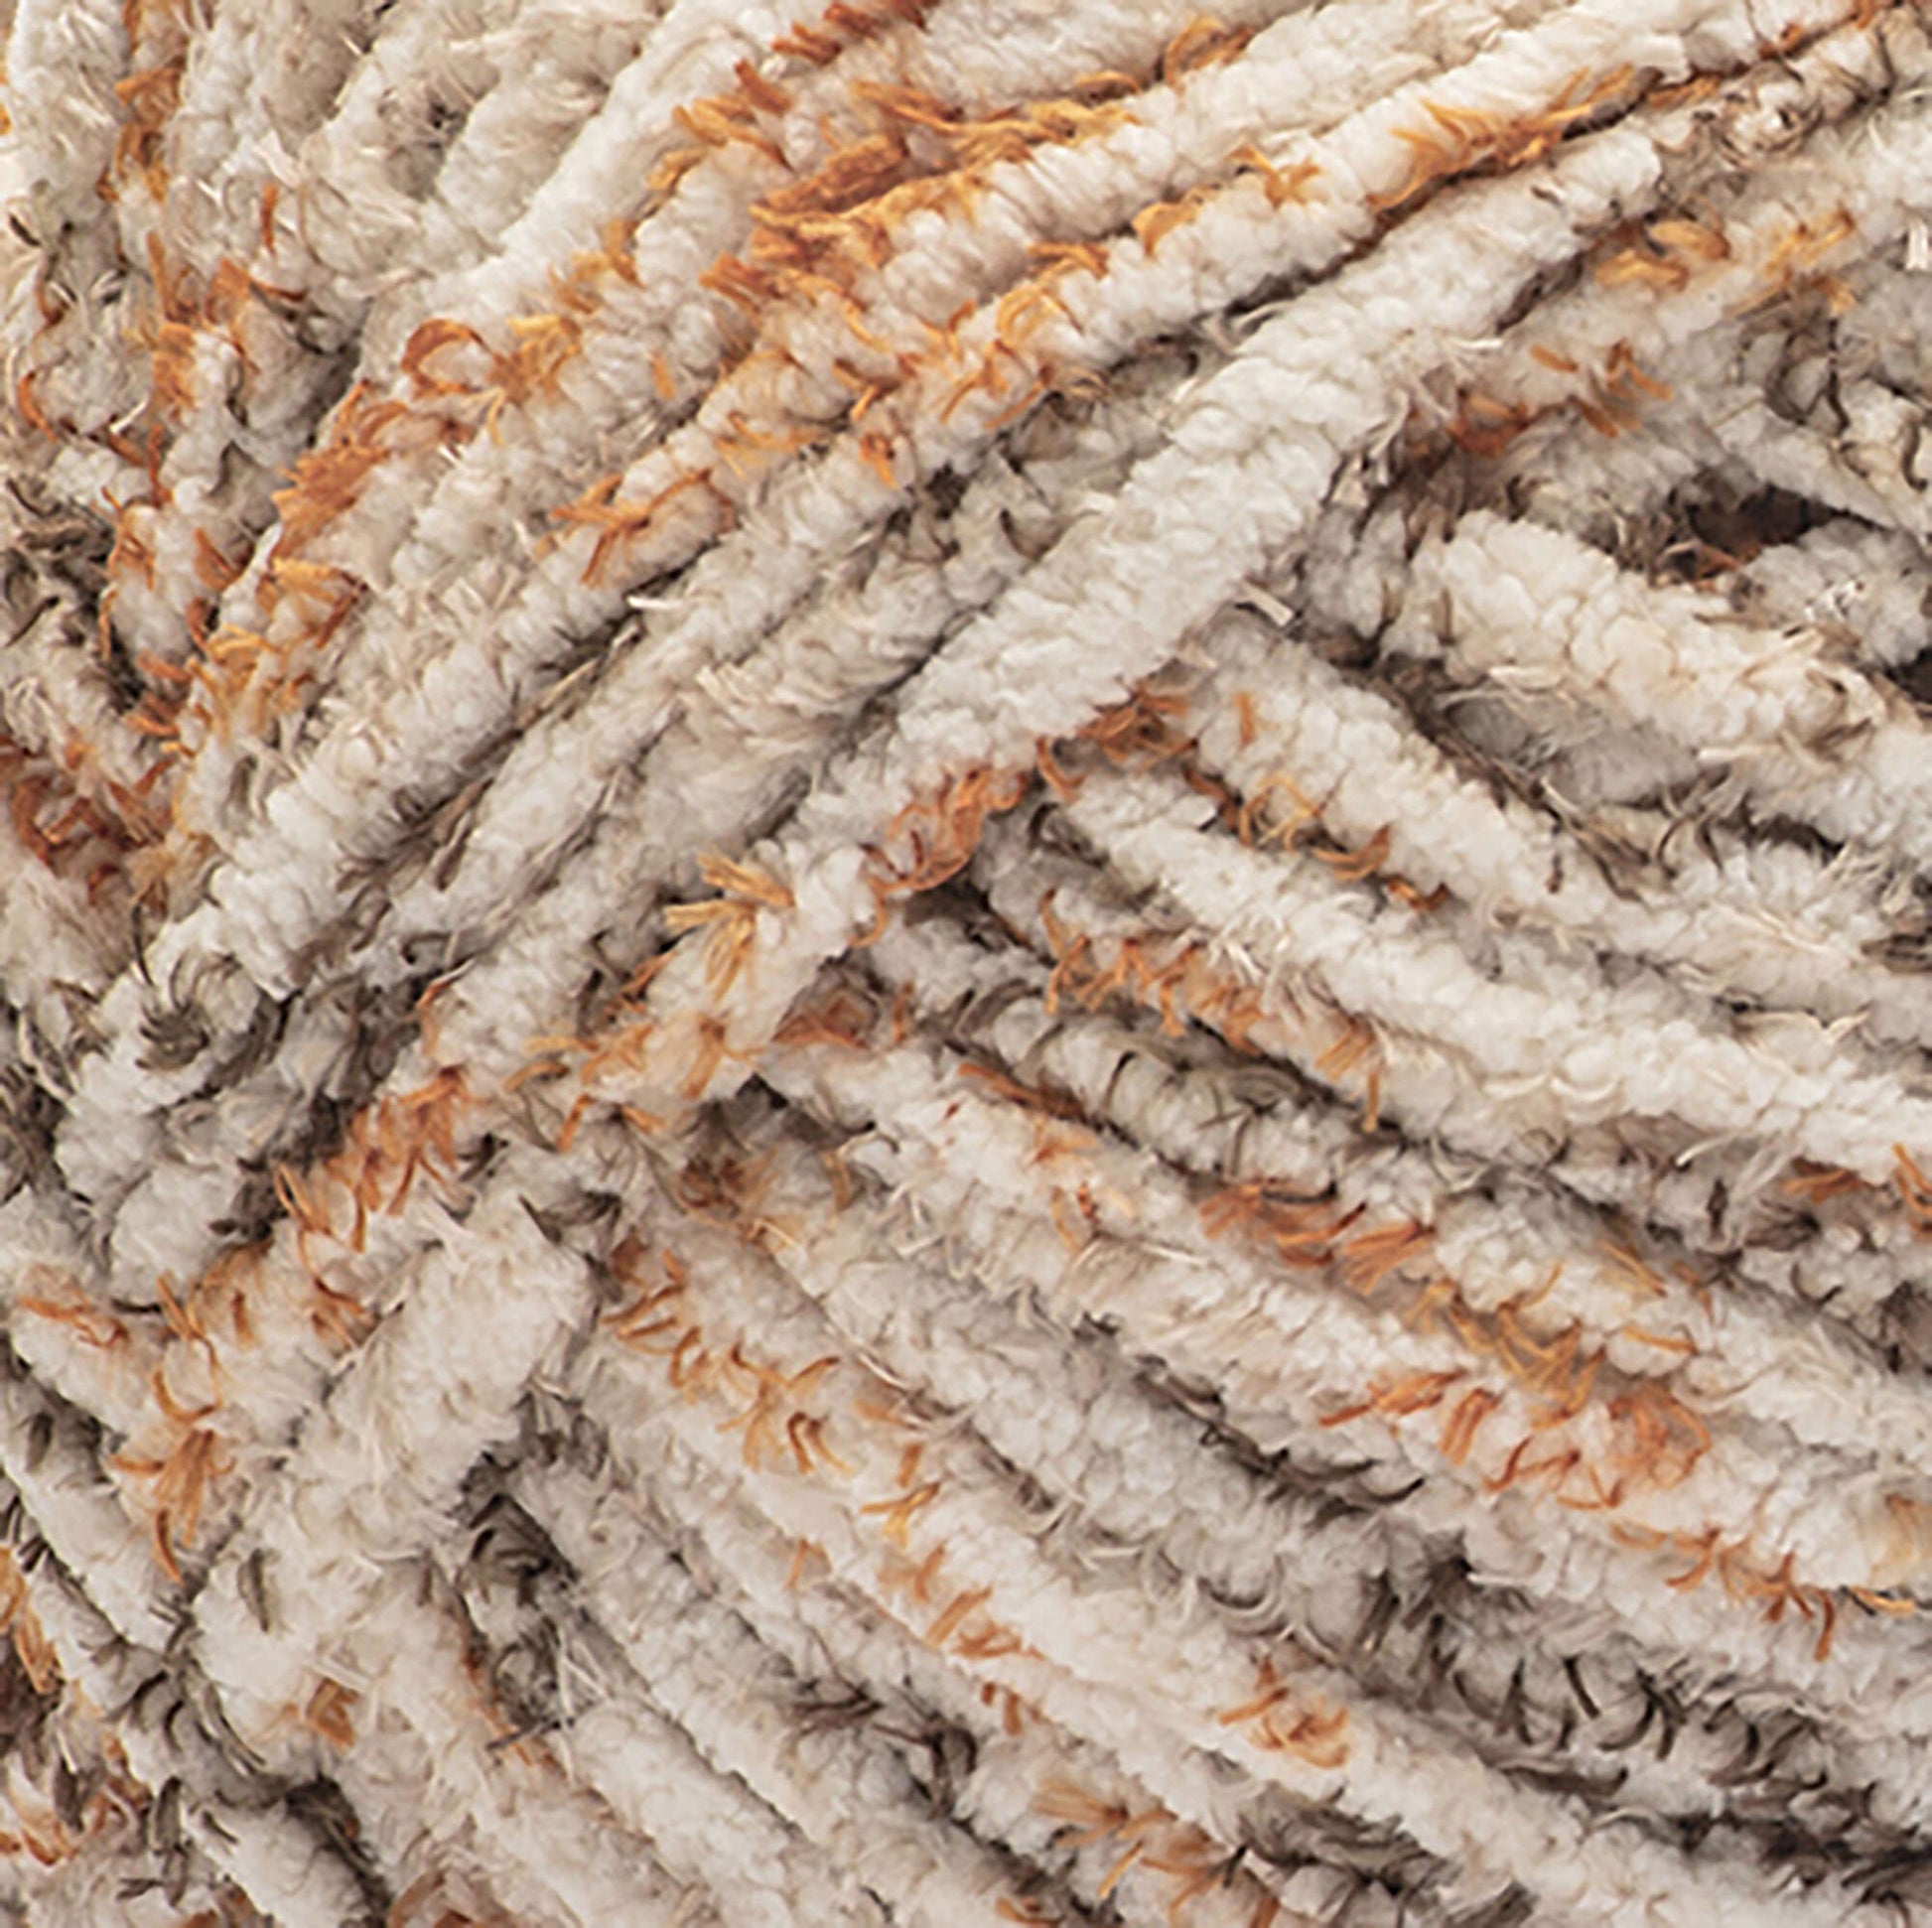 Bernat Blanket Tweeds Yarn (300g/10.5oz) | Yarnspirations